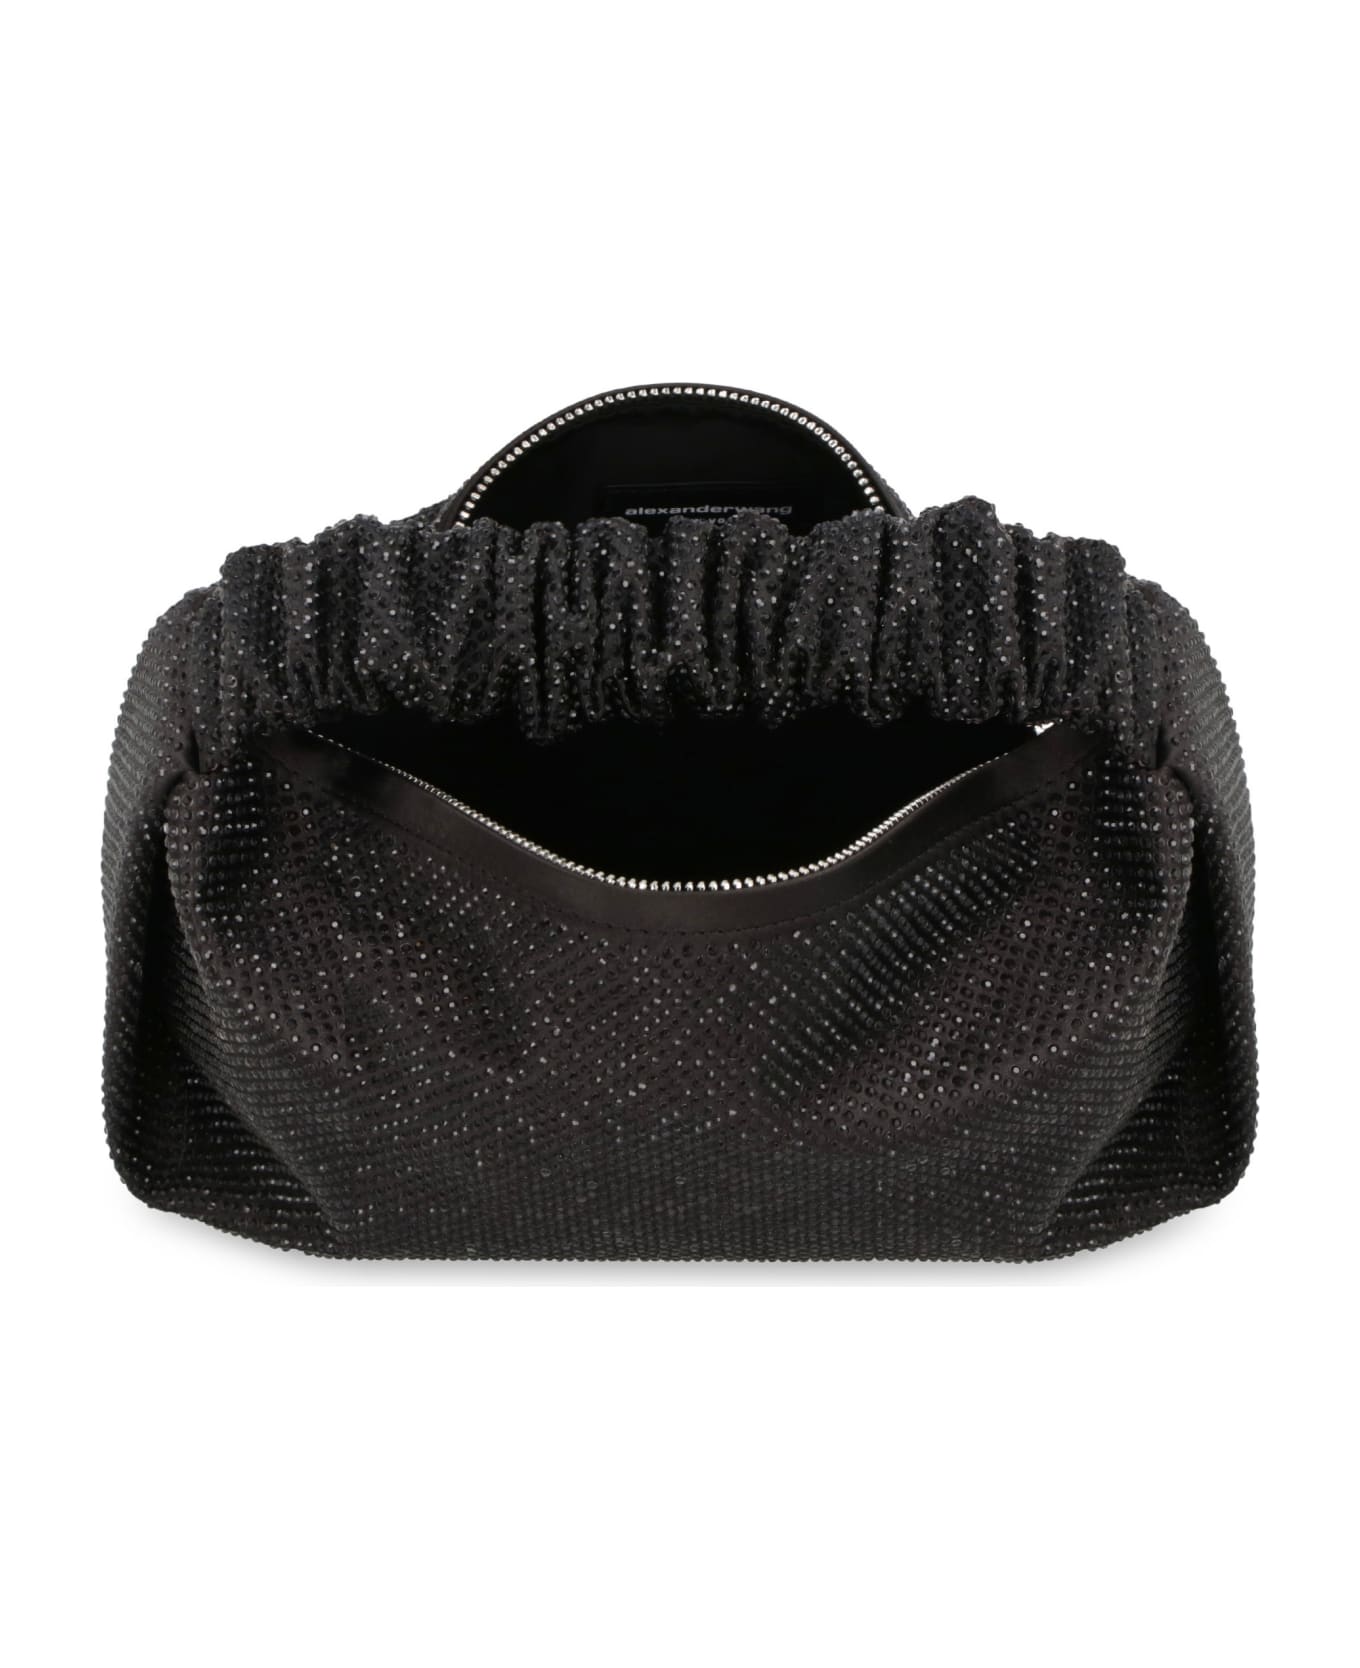 Alexander Wang Scrunchie Mini Handbag - black